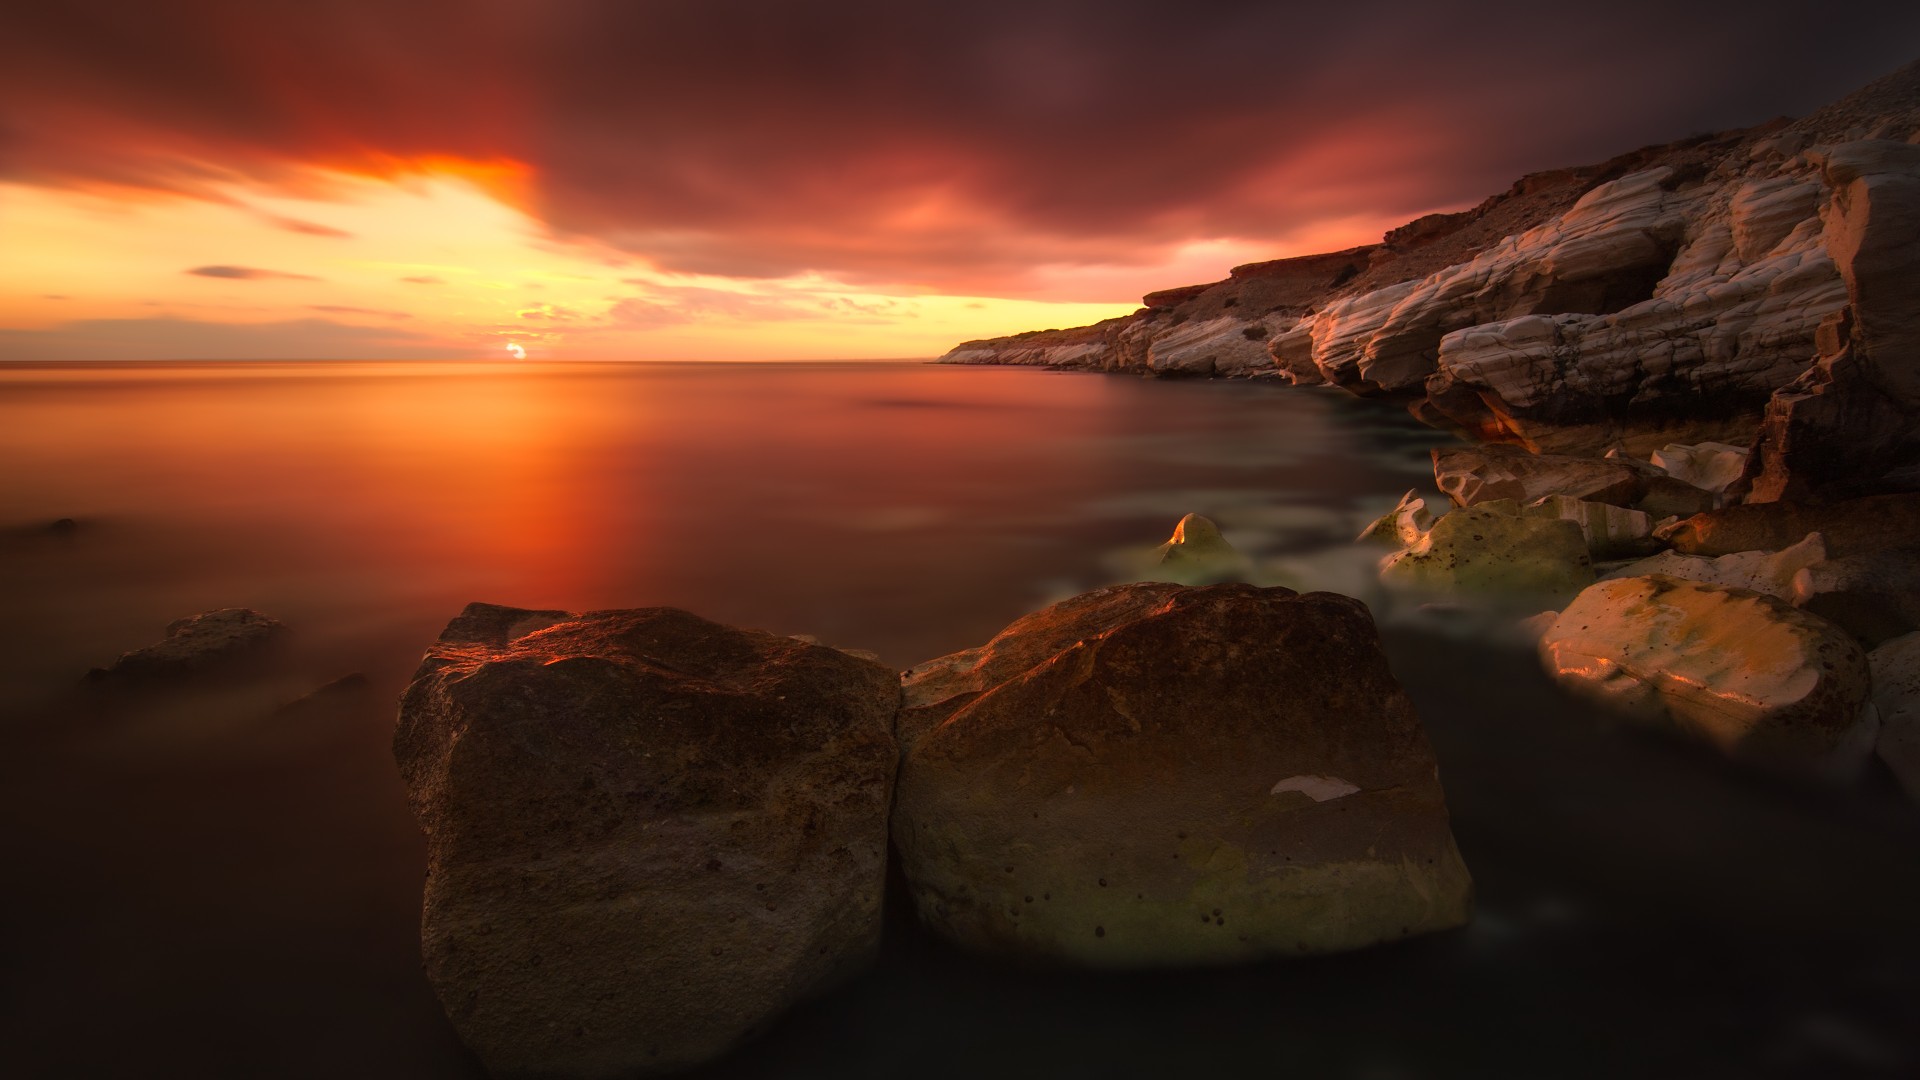 Sunset, 4k, HD wallpaper, rocks, sea, ocean, water, red, clouds, sky, sun (horizontal)